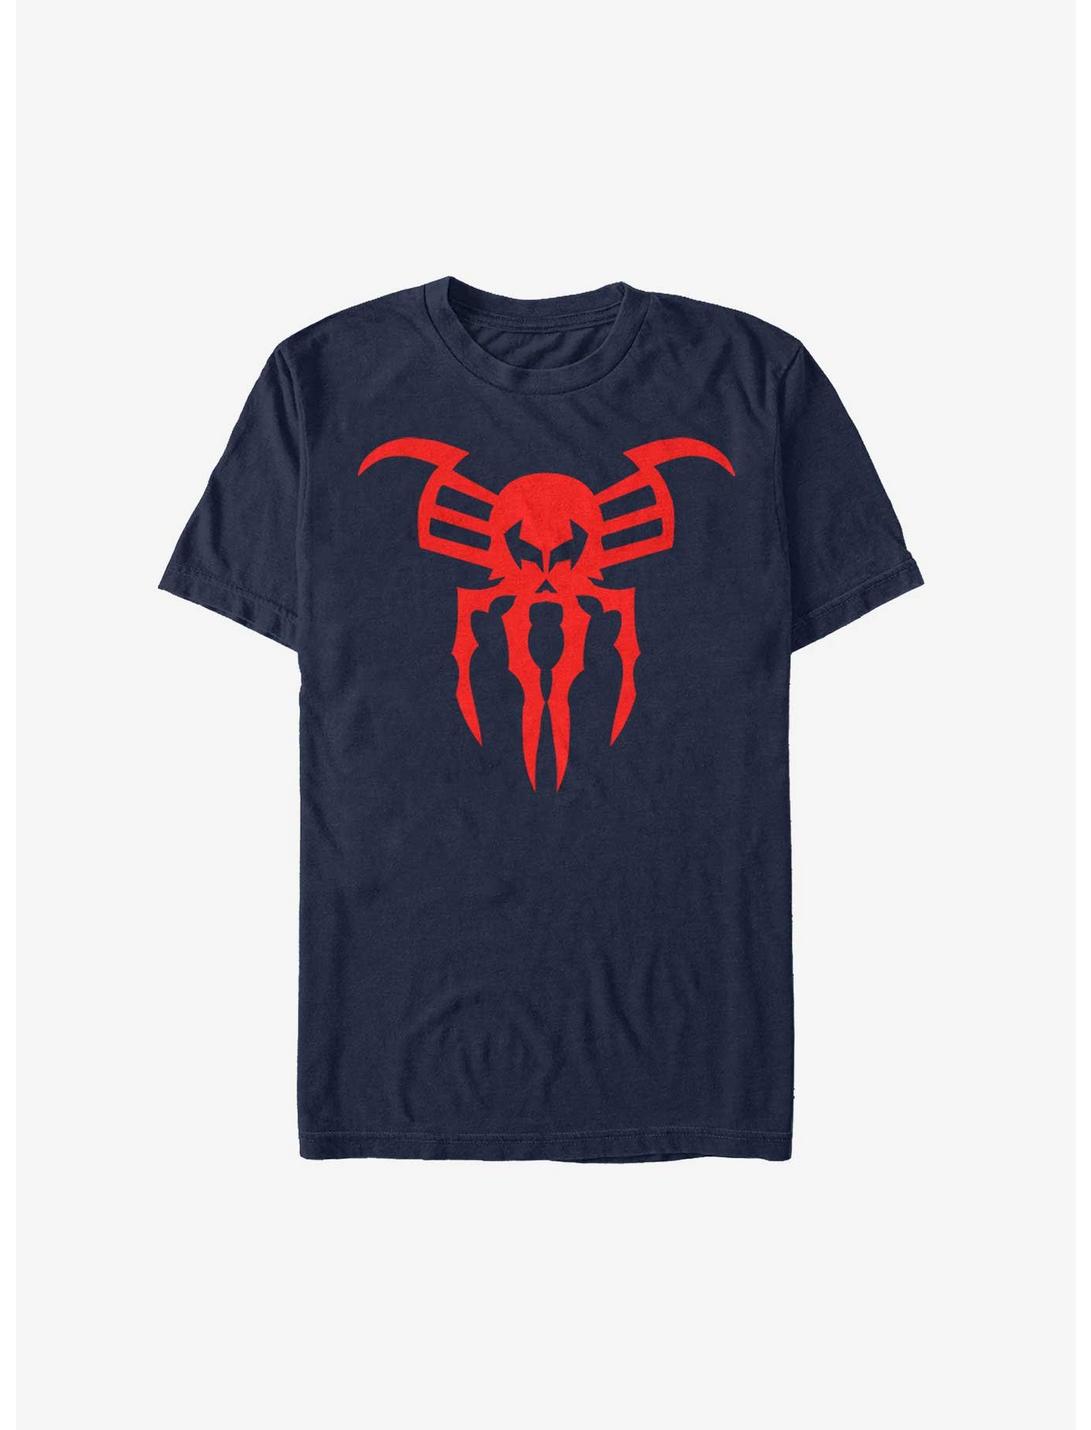 Extra Soft Marvel Spider-Man 2099 Icon T-Shirt, NAVY, hi-res